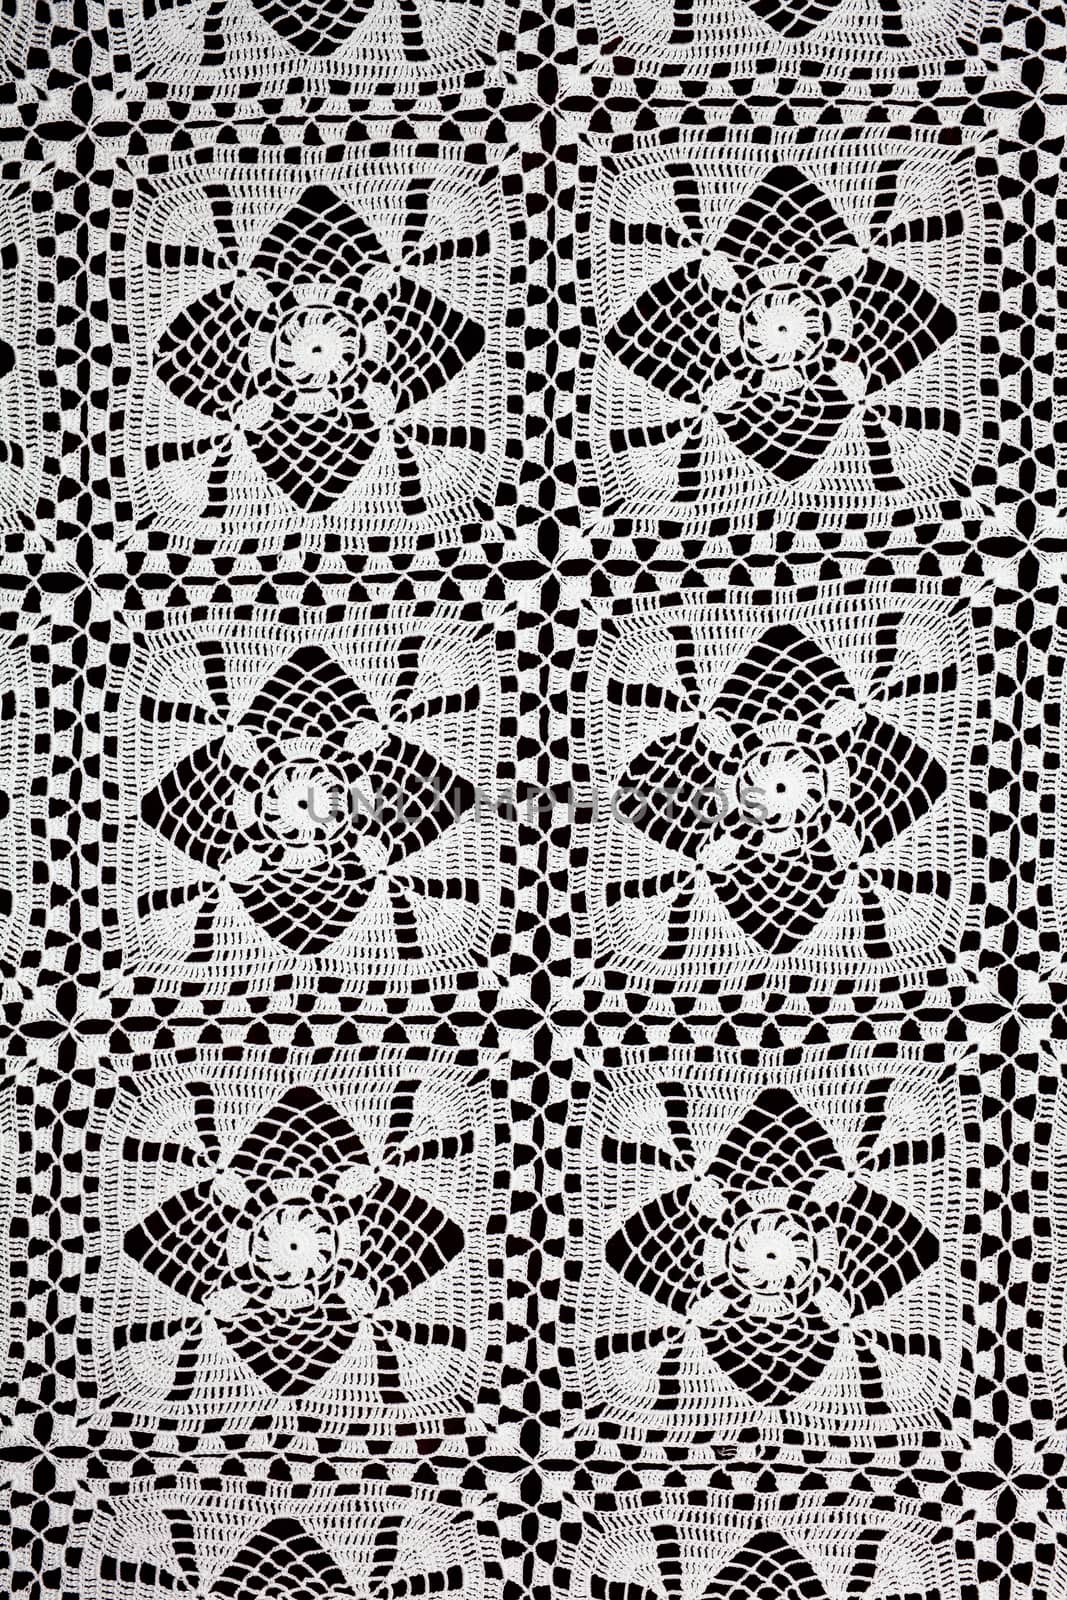 Handmade white lace doily runner on a black background